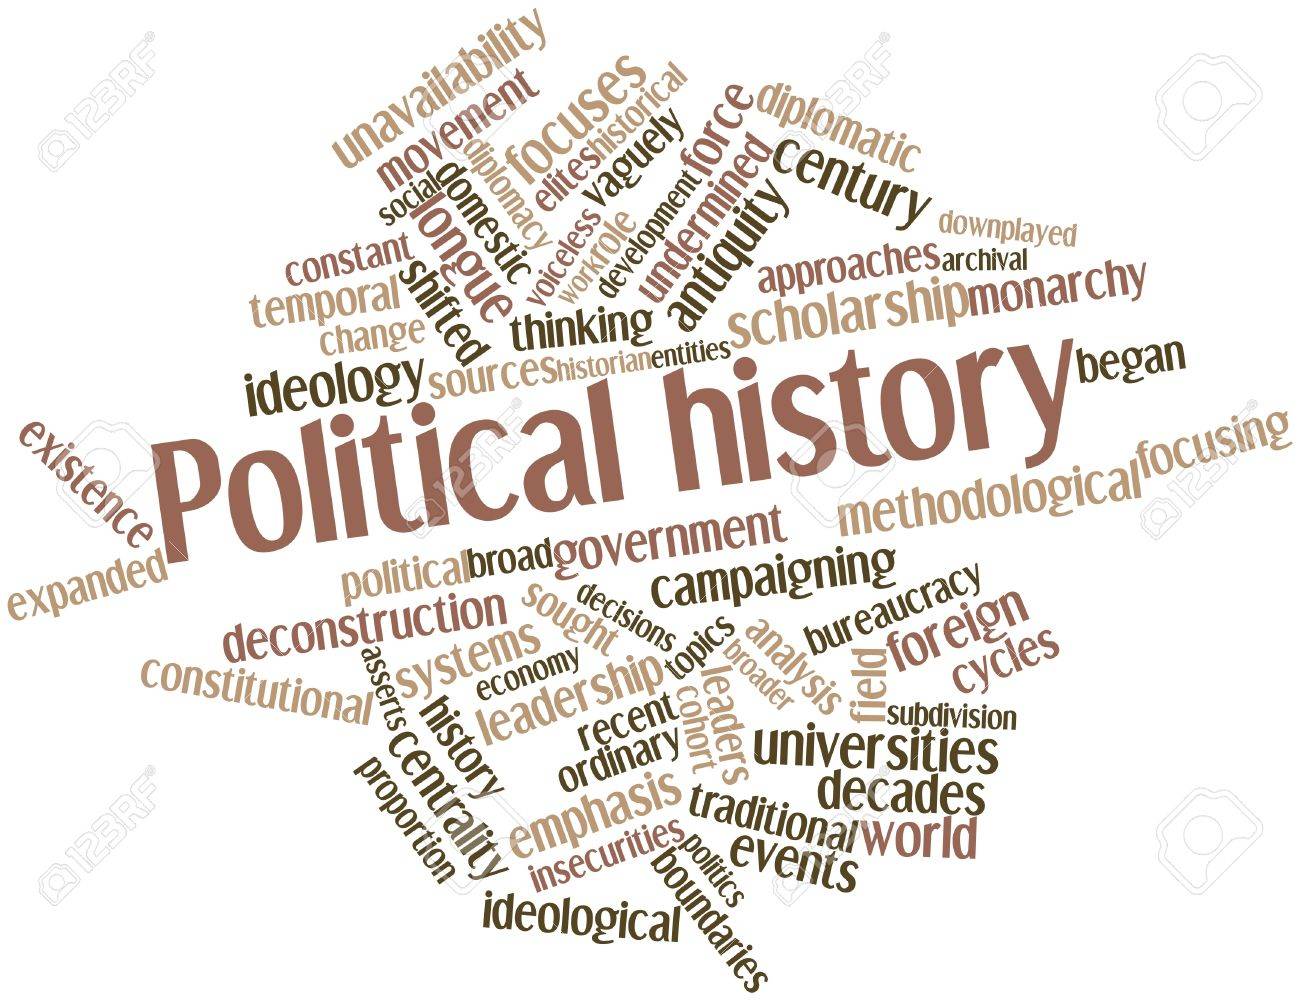 Political History's Impact on Politics | Insights